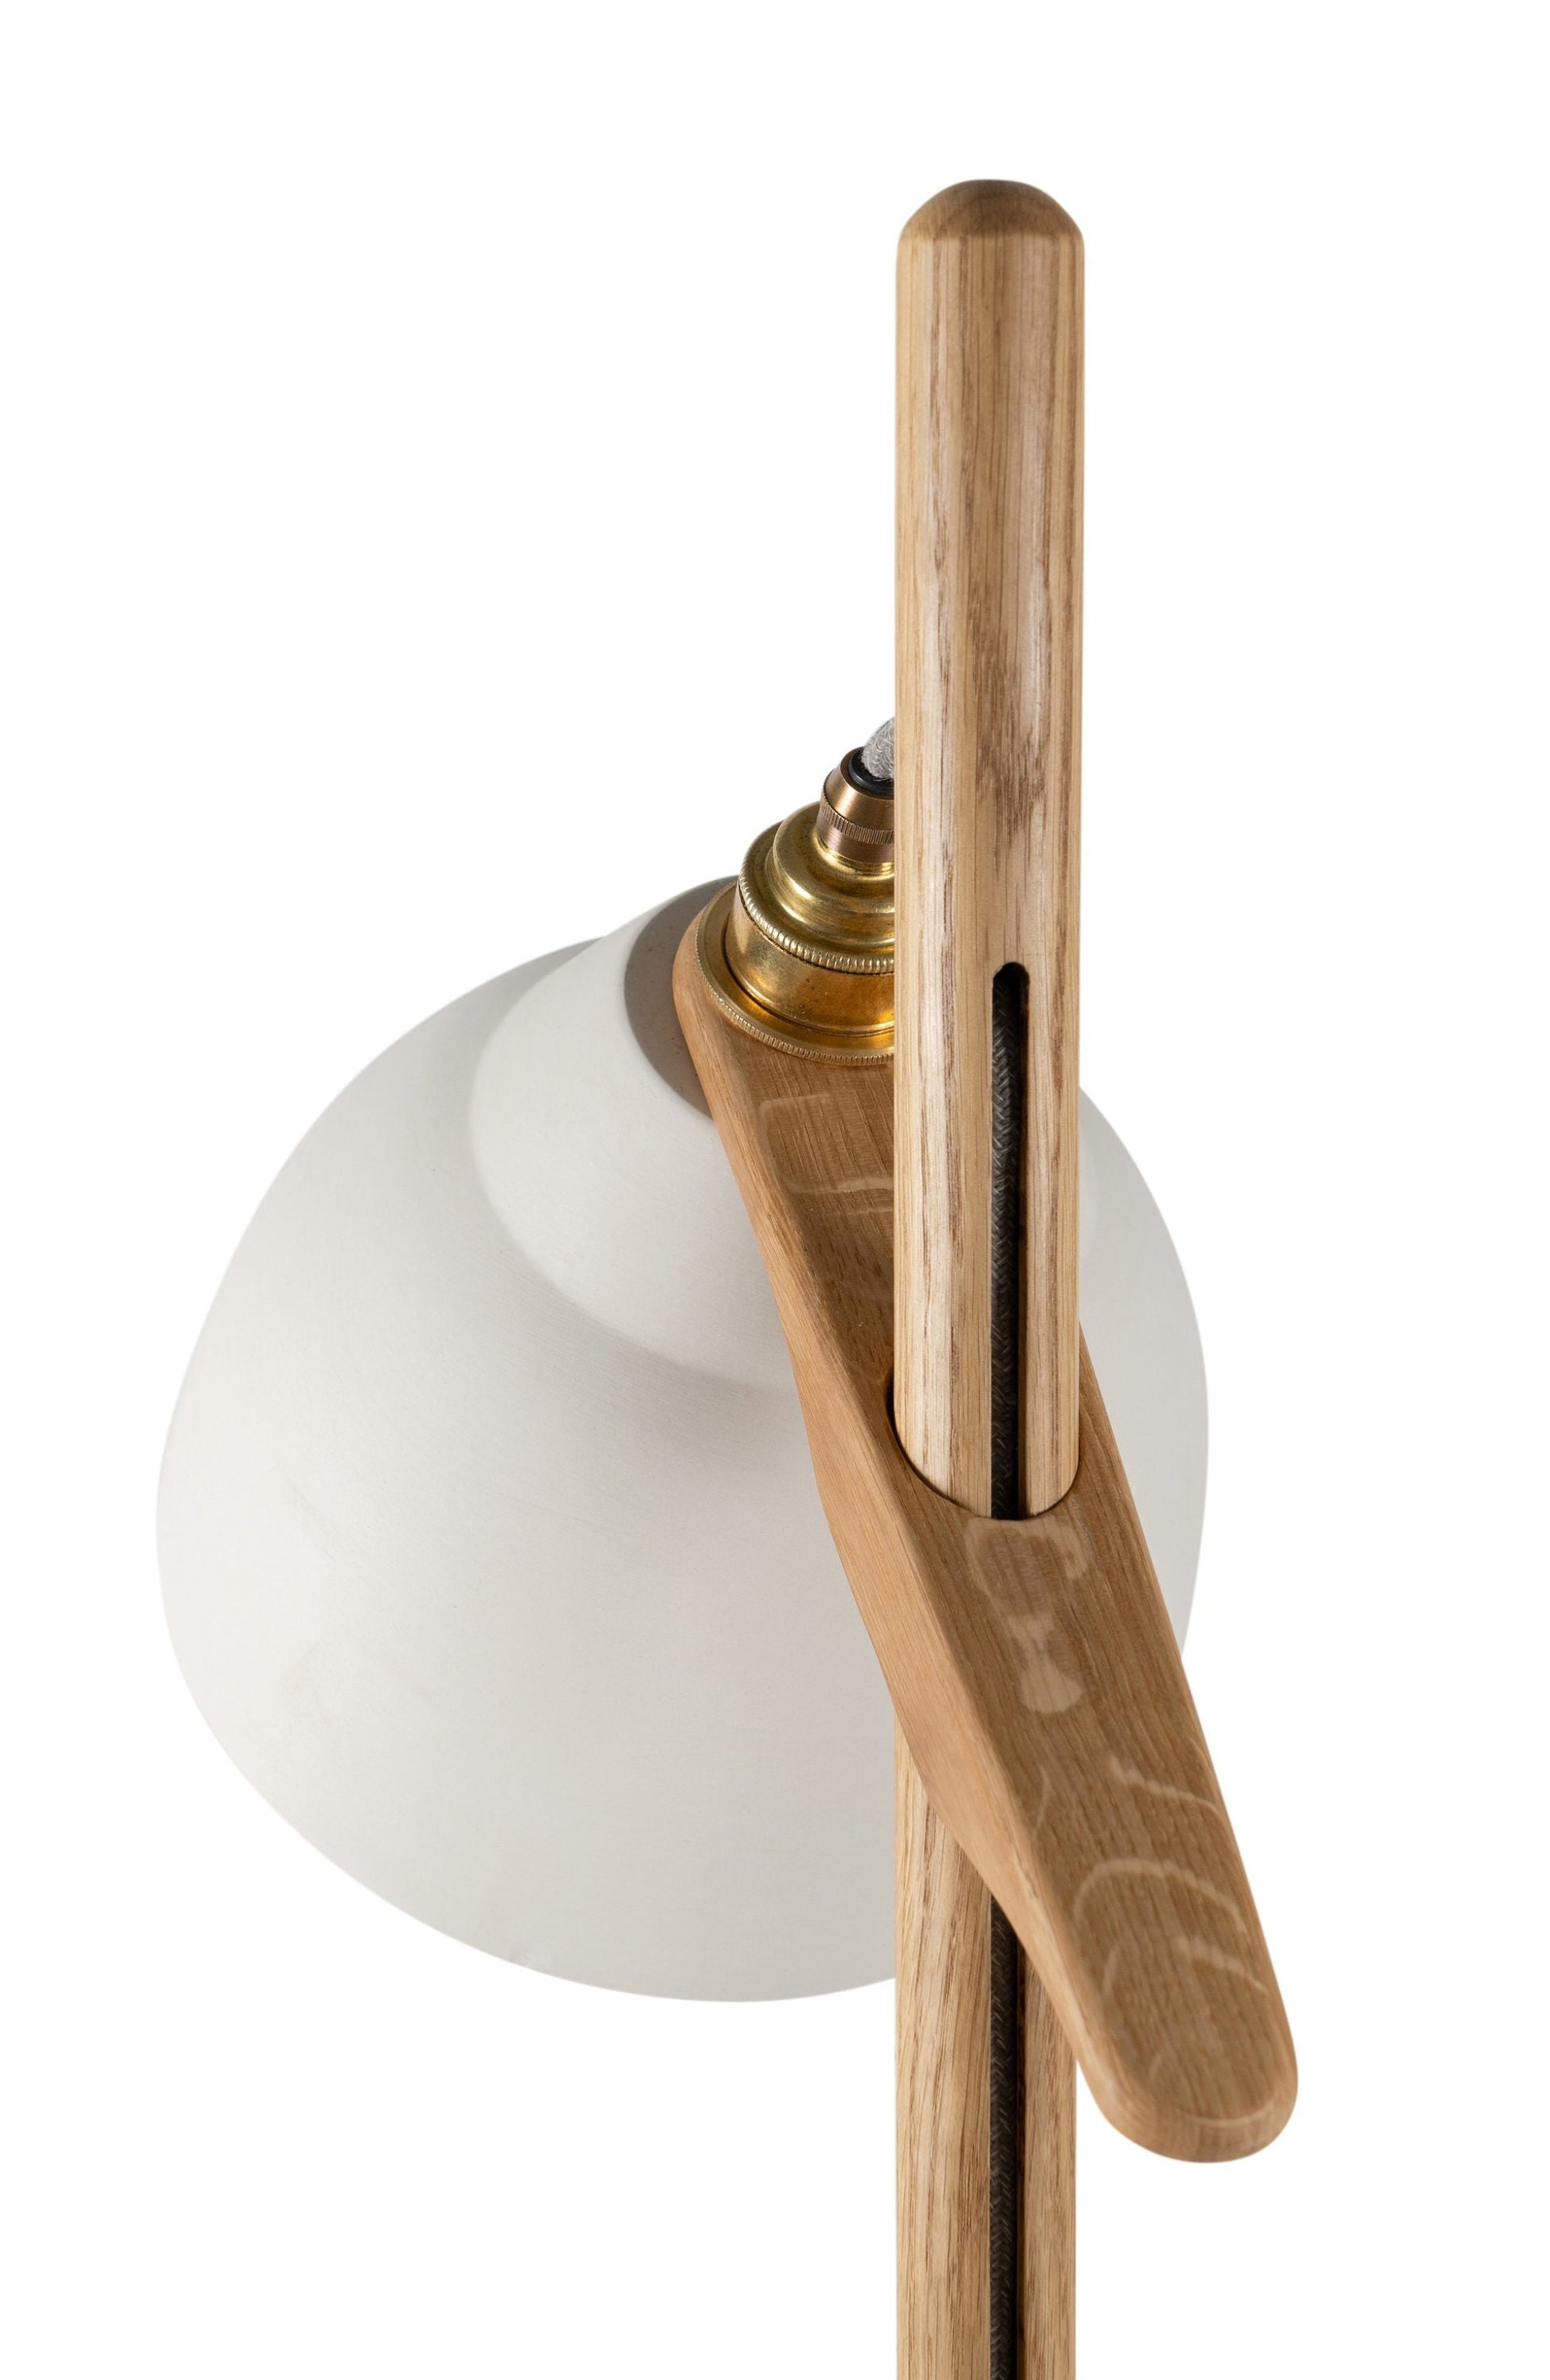 Element Floor lamp in Solid Oak Wood and Ceramic by StudioHaran